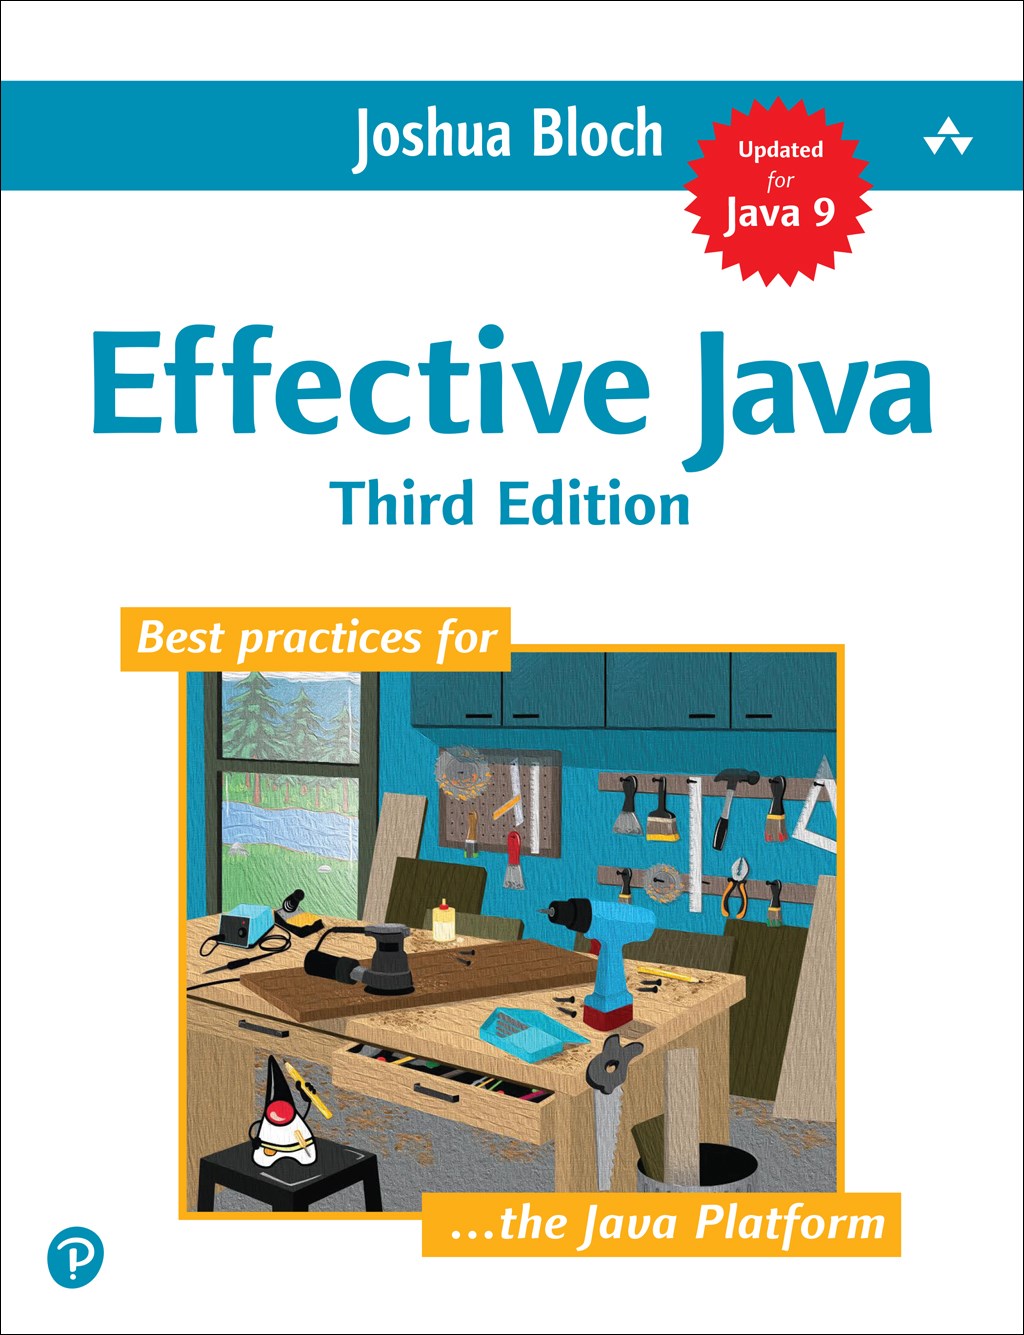 Effective Java, 3rd Edition